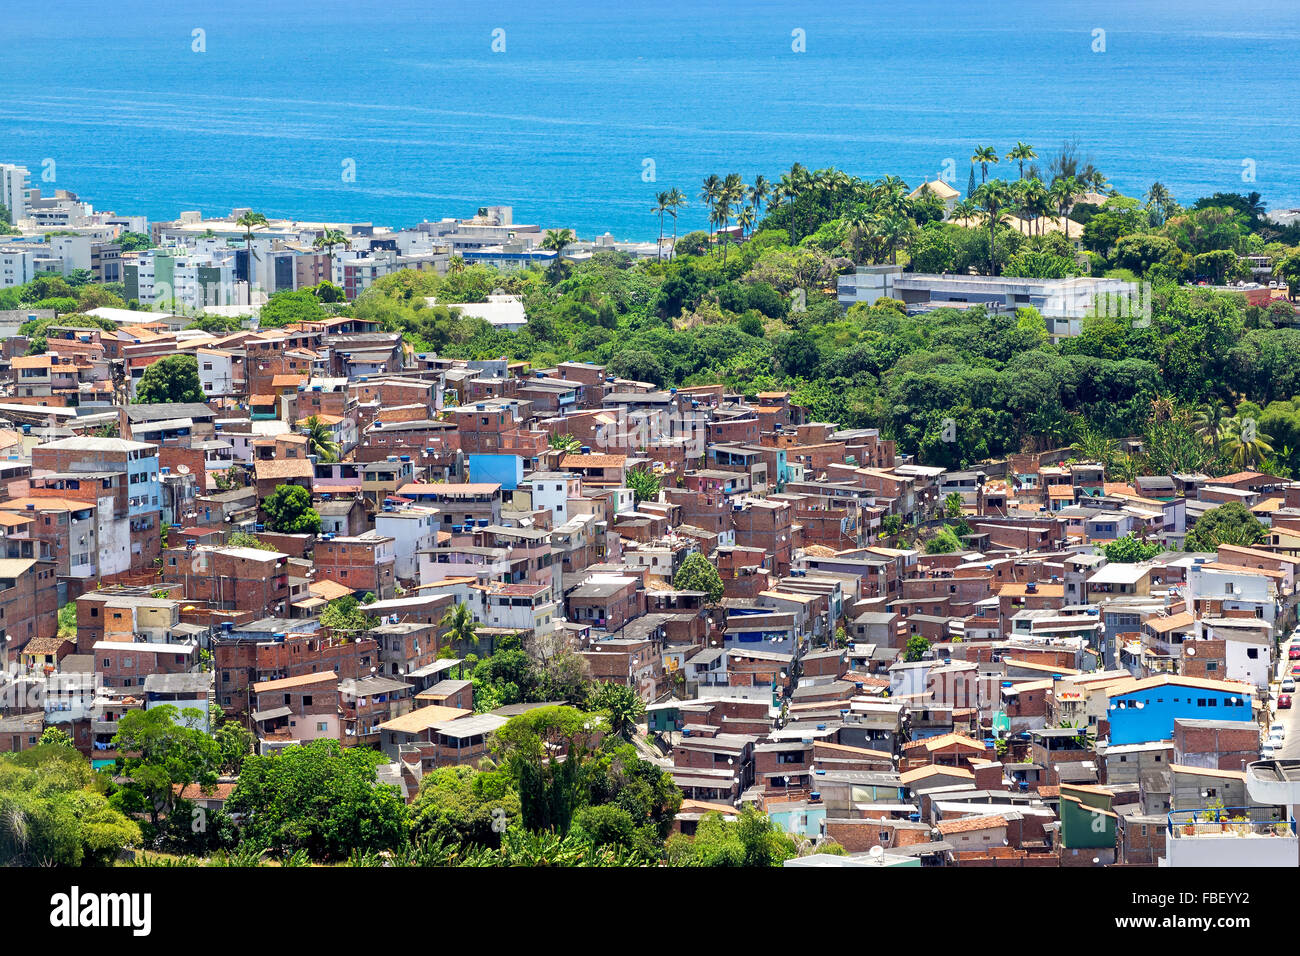 Vista aerea di favela (bidonville) in Salvador, Bahia, Brasile. Foto Stock